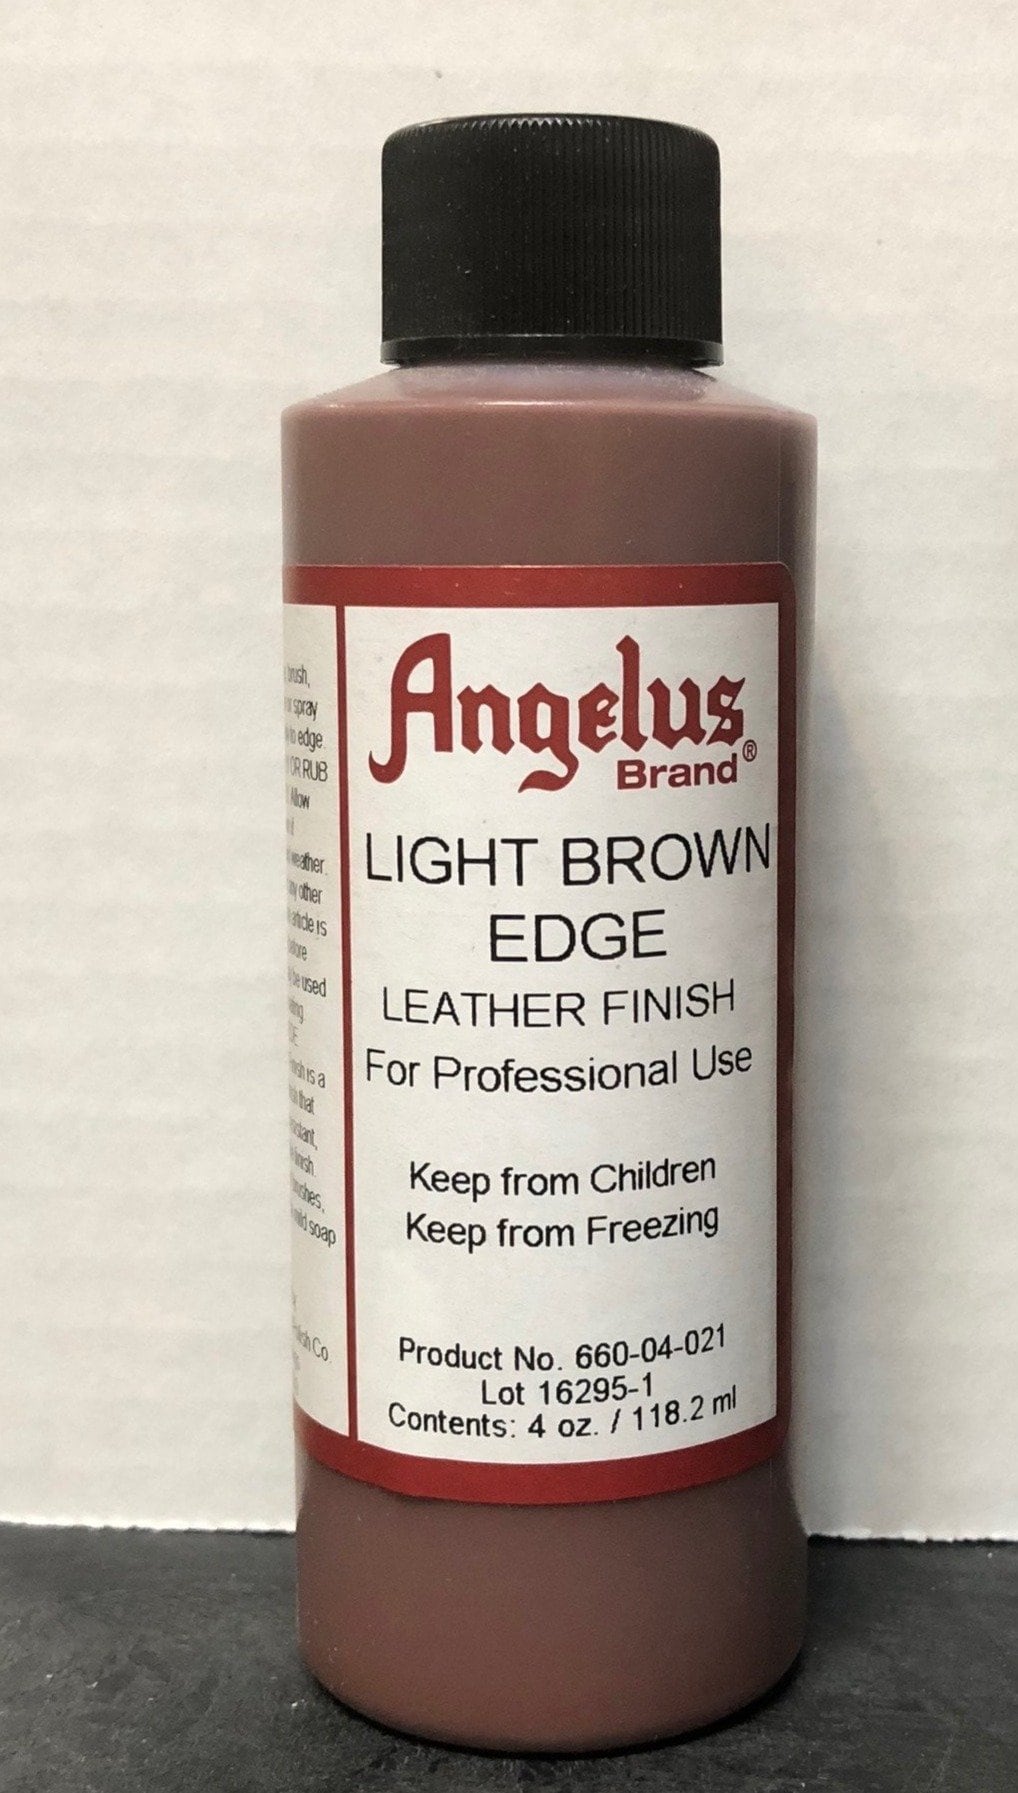 Angelus Leather Paint Light Brown